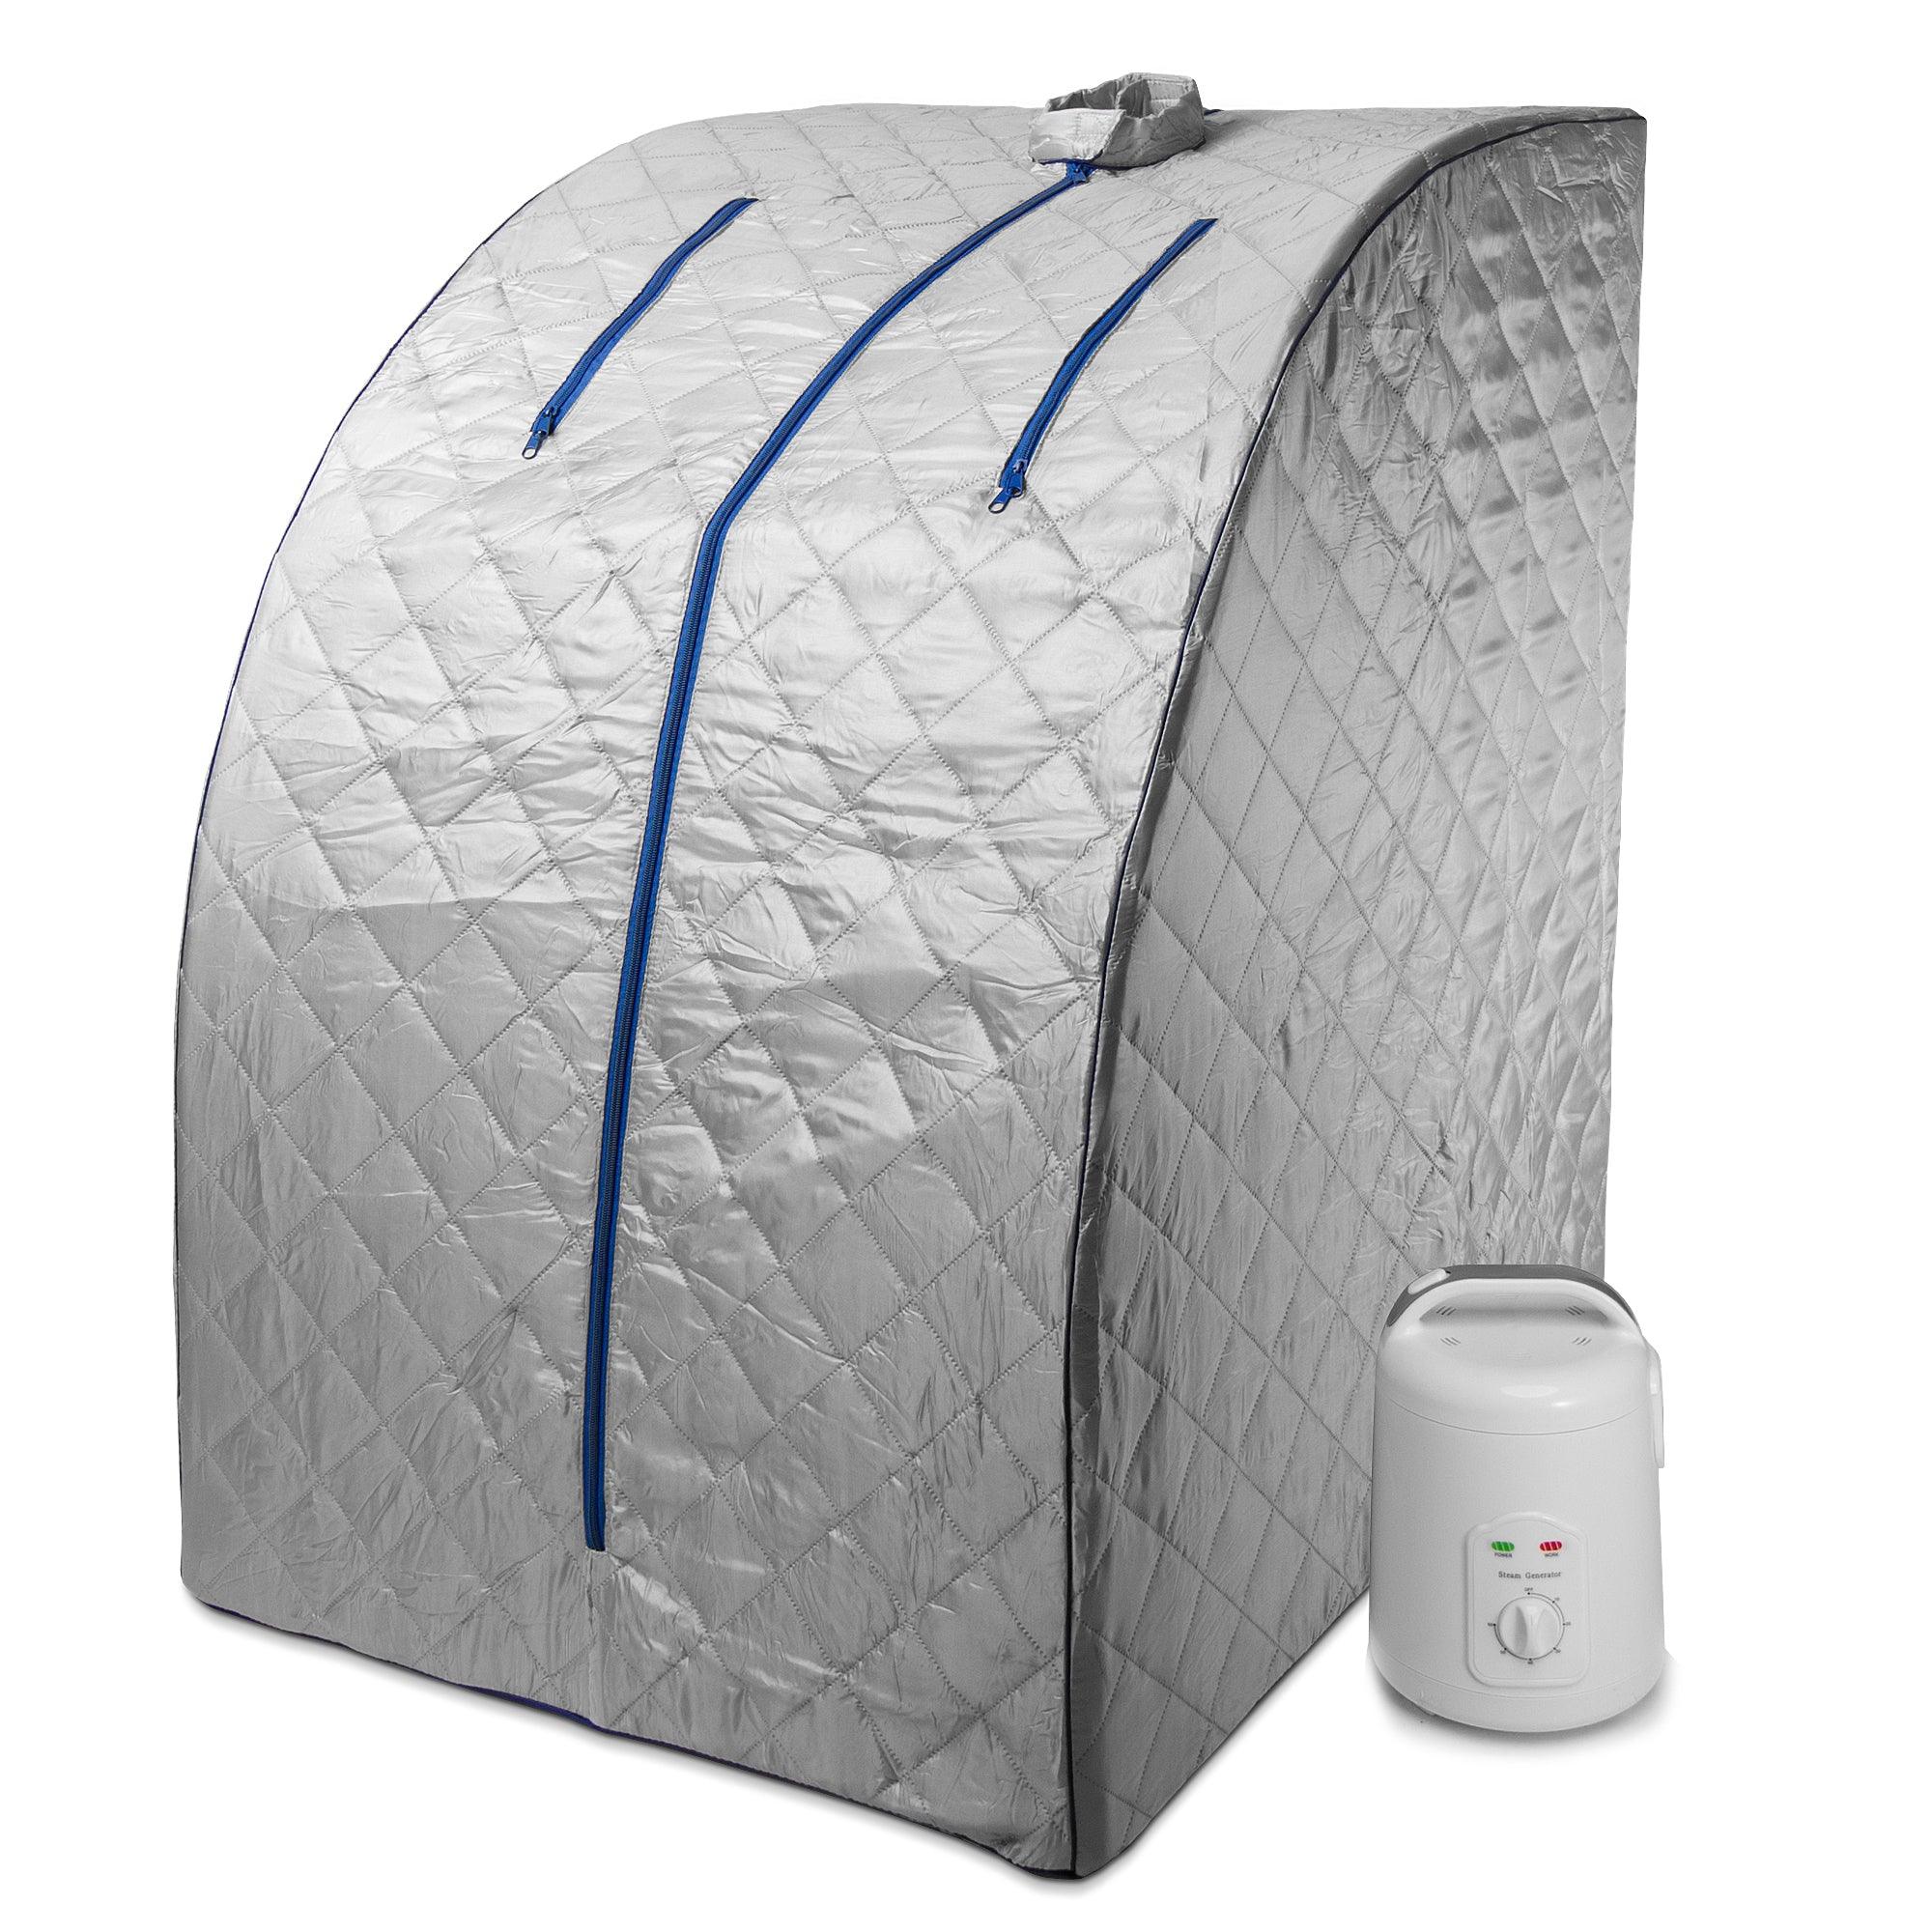 Cheelom Weight Loss Sauna Tent Portable Steam Sauna tent Personal